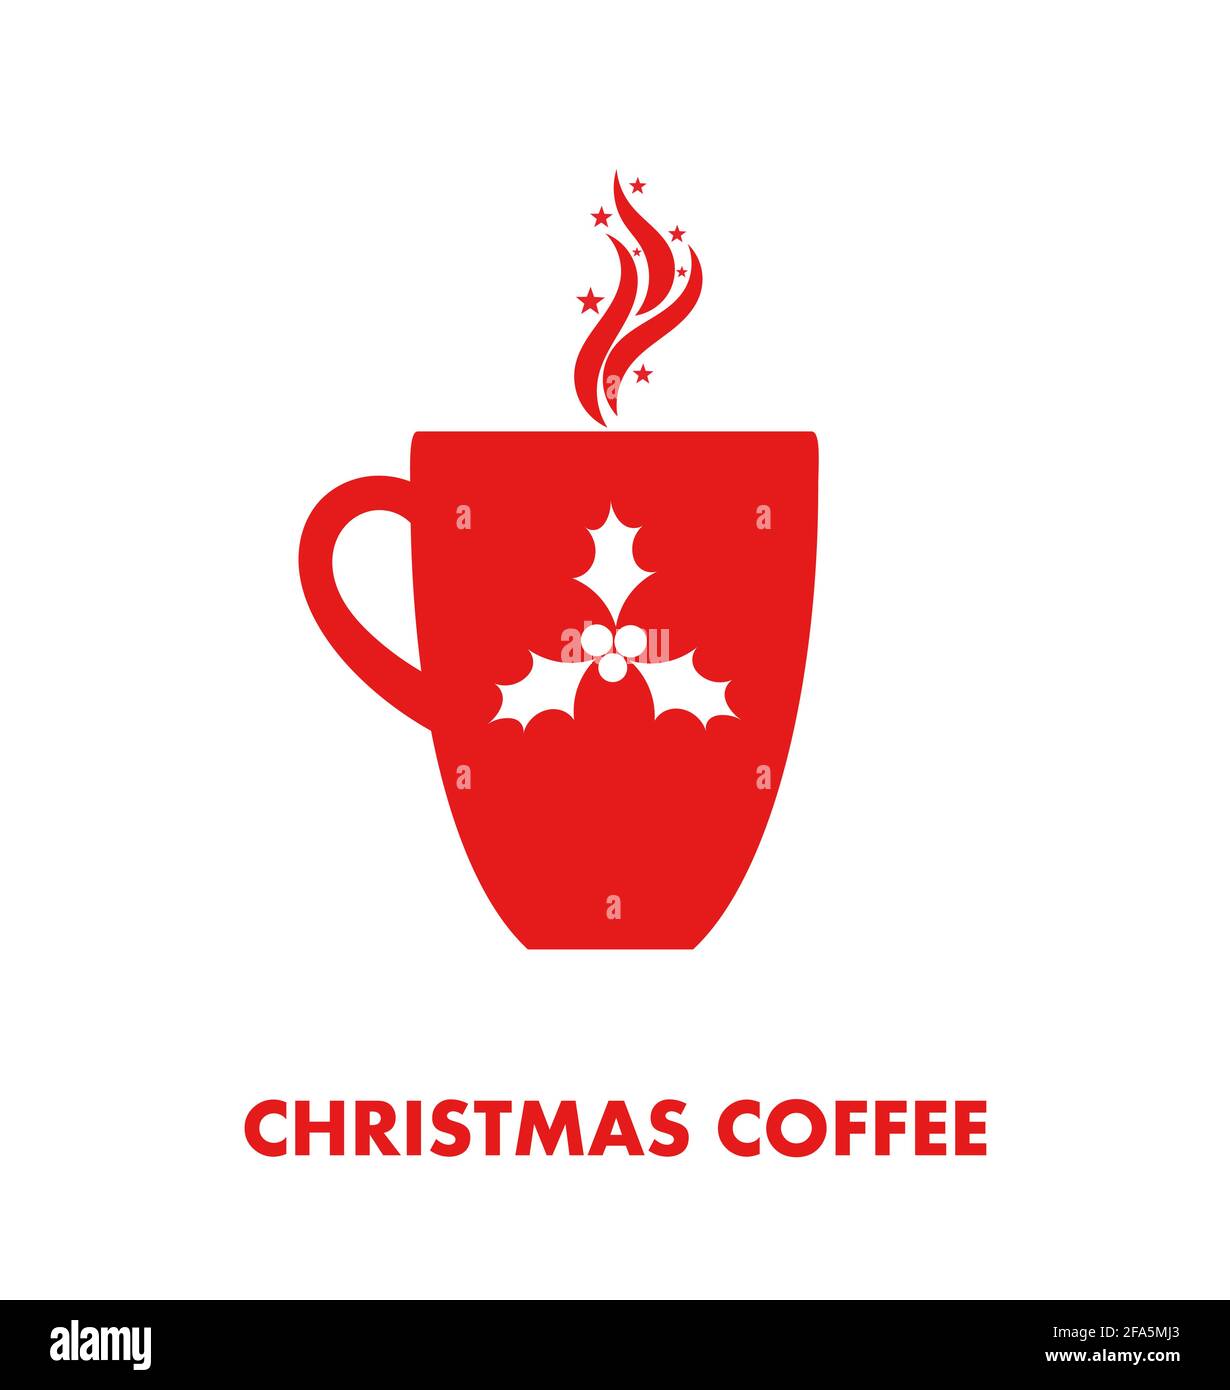 https://c8.alamy.com/comp/2FA5MJ3/christmas-hot-red-coffee-mug-illustration-2FA5MJ3.jpg